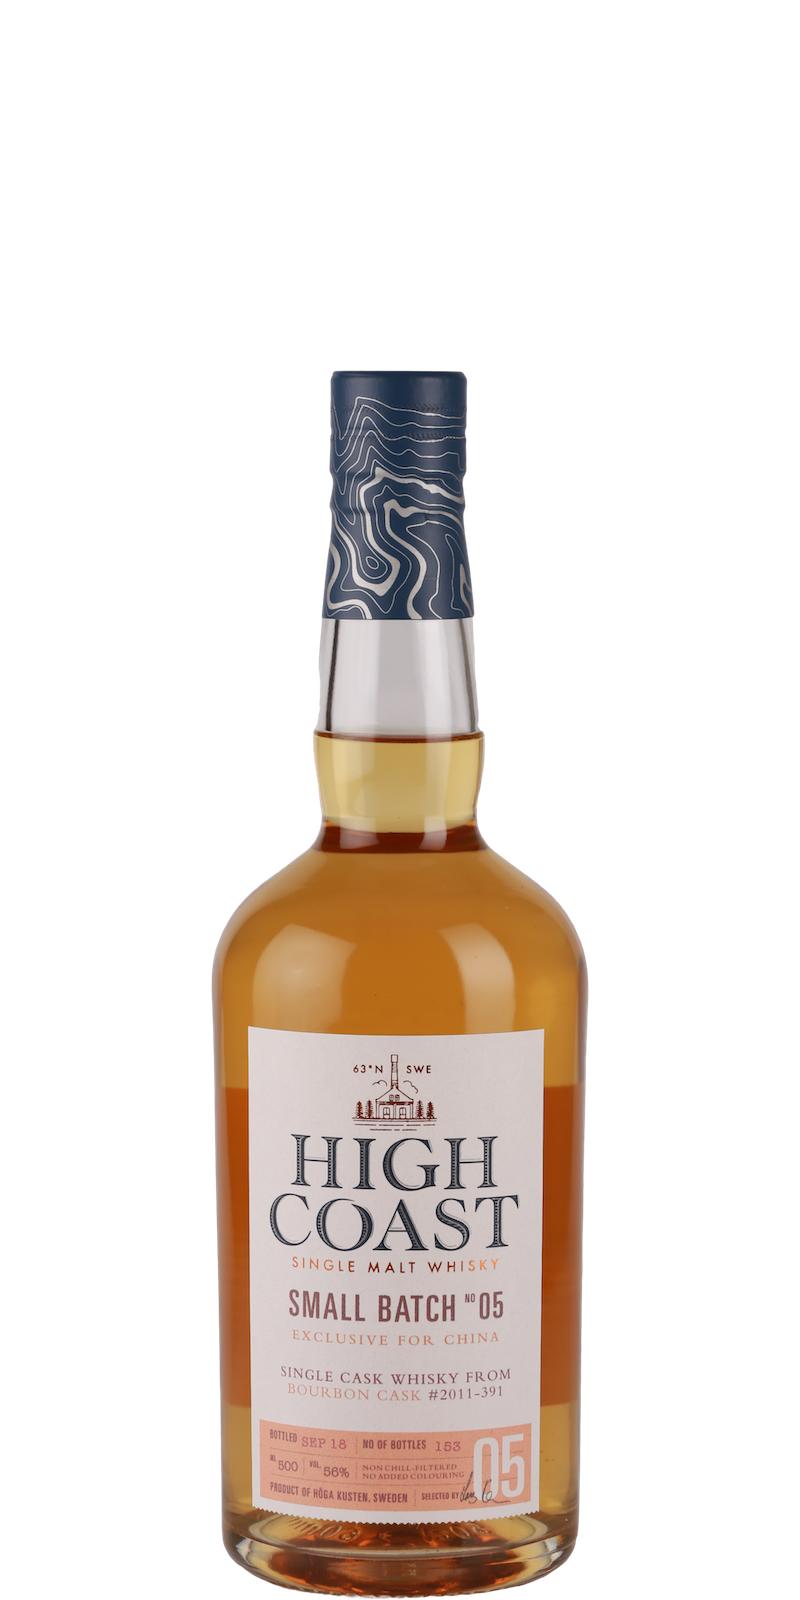 High Coast Small Batch No 05 Ex Bourbon 2011-391 Exclusive for China 56% 500ml